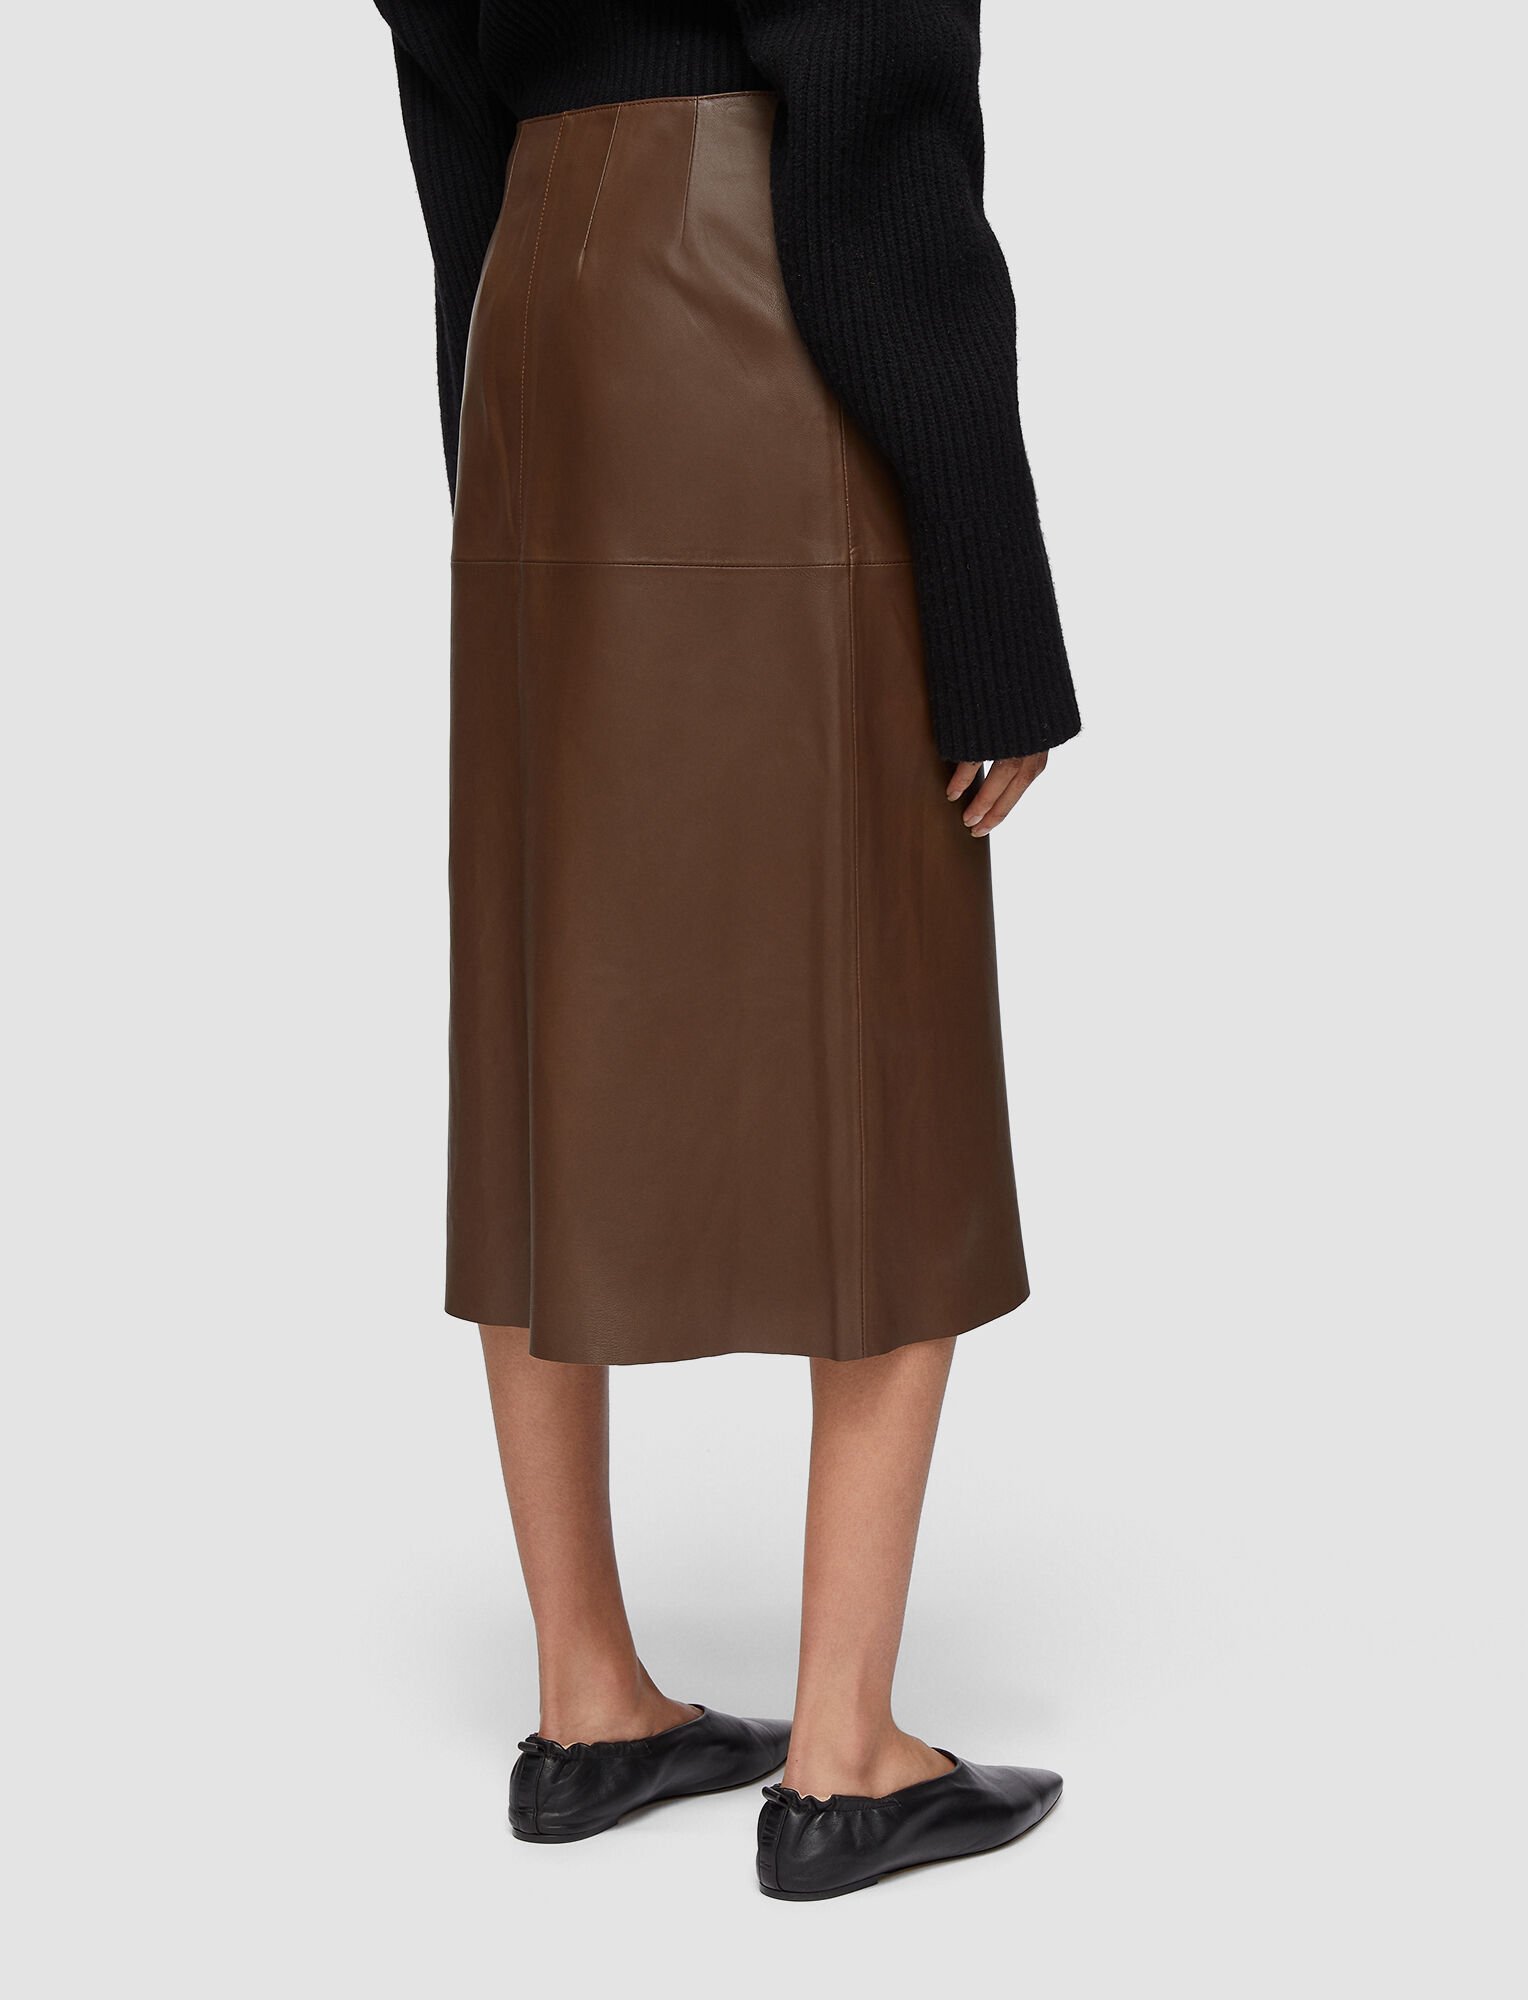 Joseph, Nappa Leather Sidena Skirt, in PINECONE